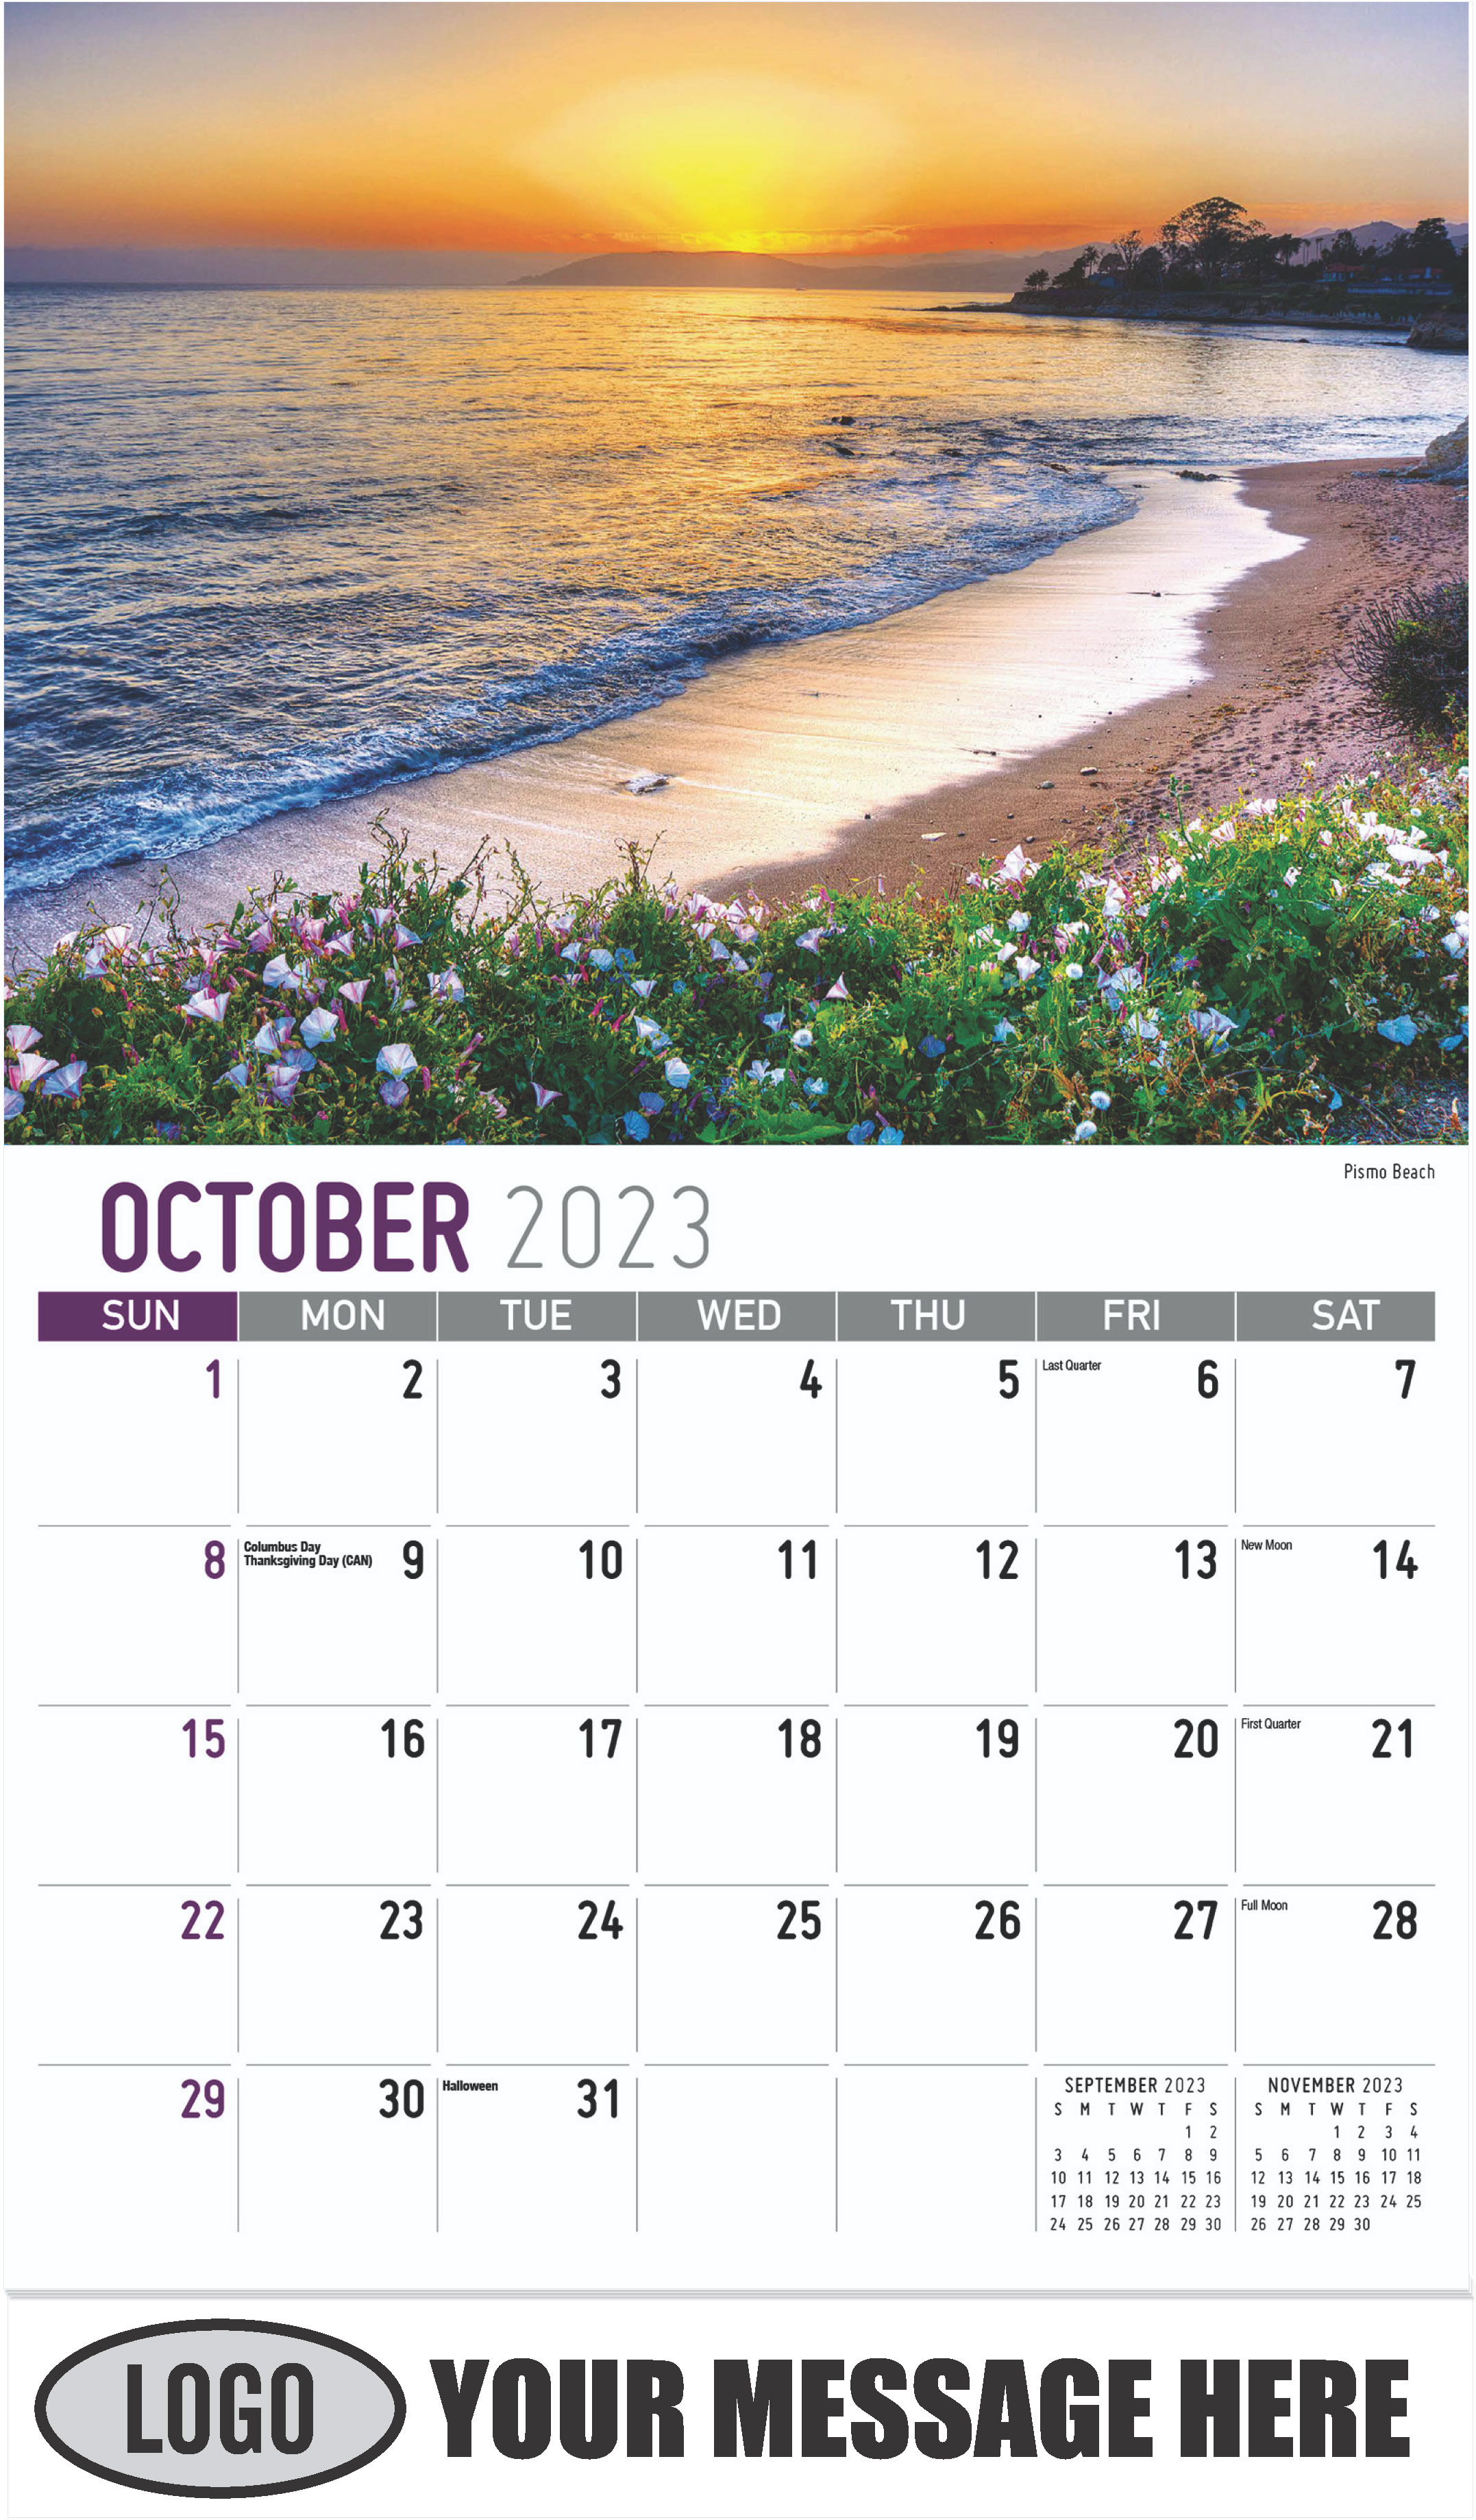 Pismo Beach - October - Scenes of California 2023 Promotional Calendar